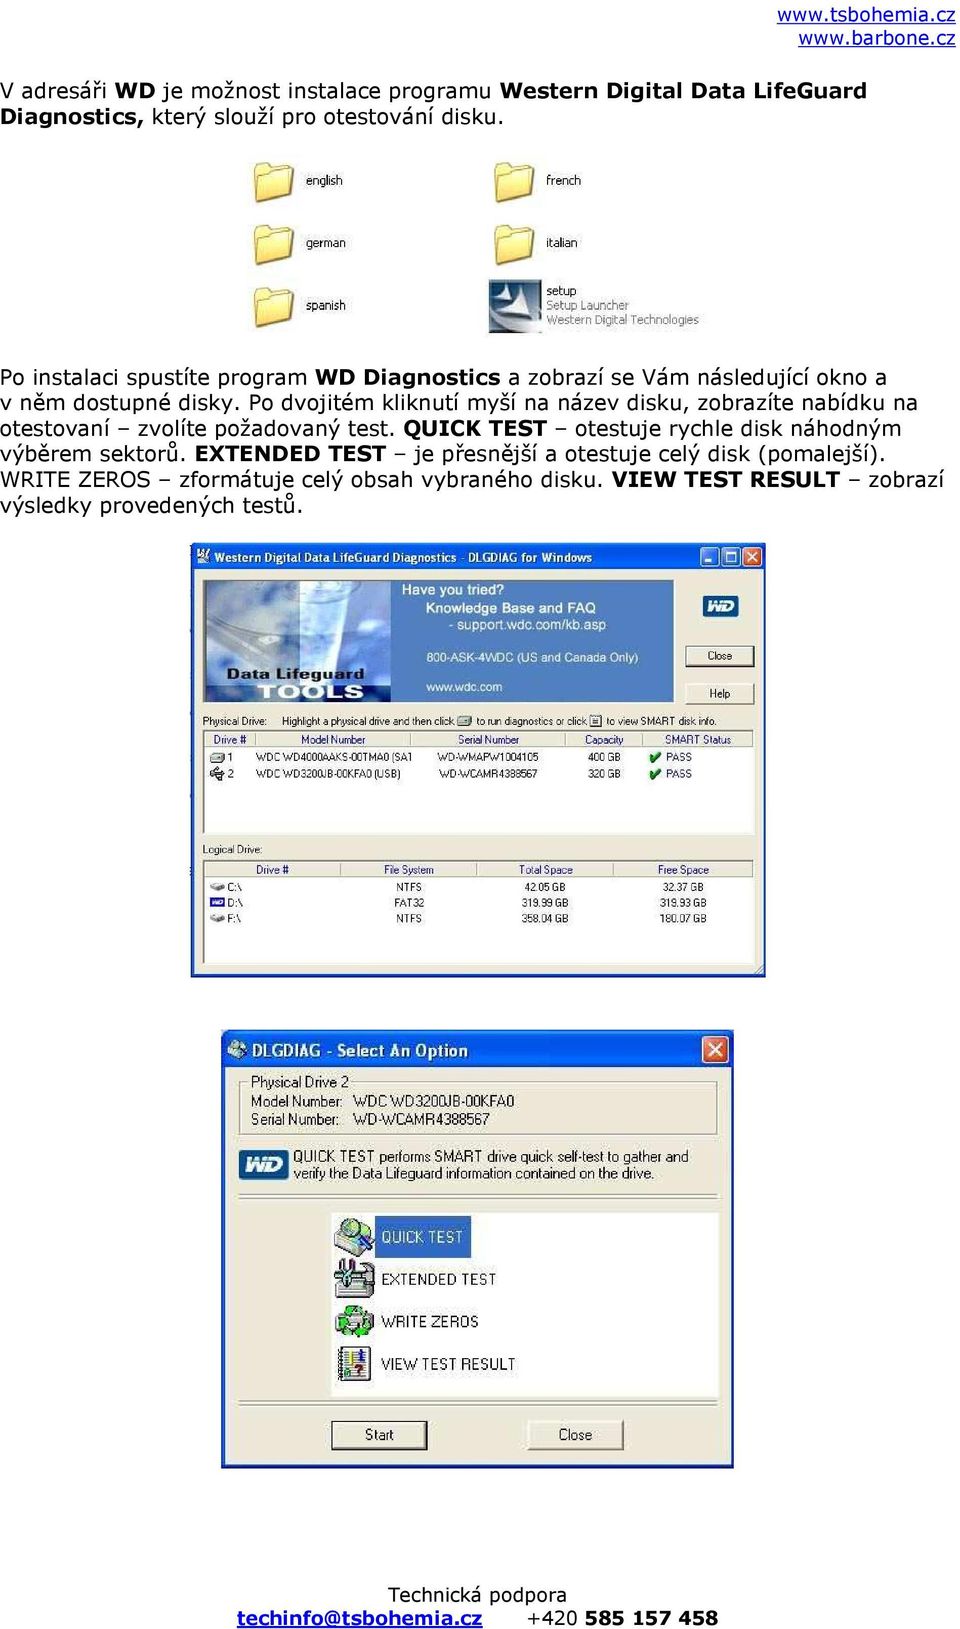 Po dvojitém kliknutí myší na název disku, zobrazíte nabídku na otestovaní zvolíte požadovaný test.